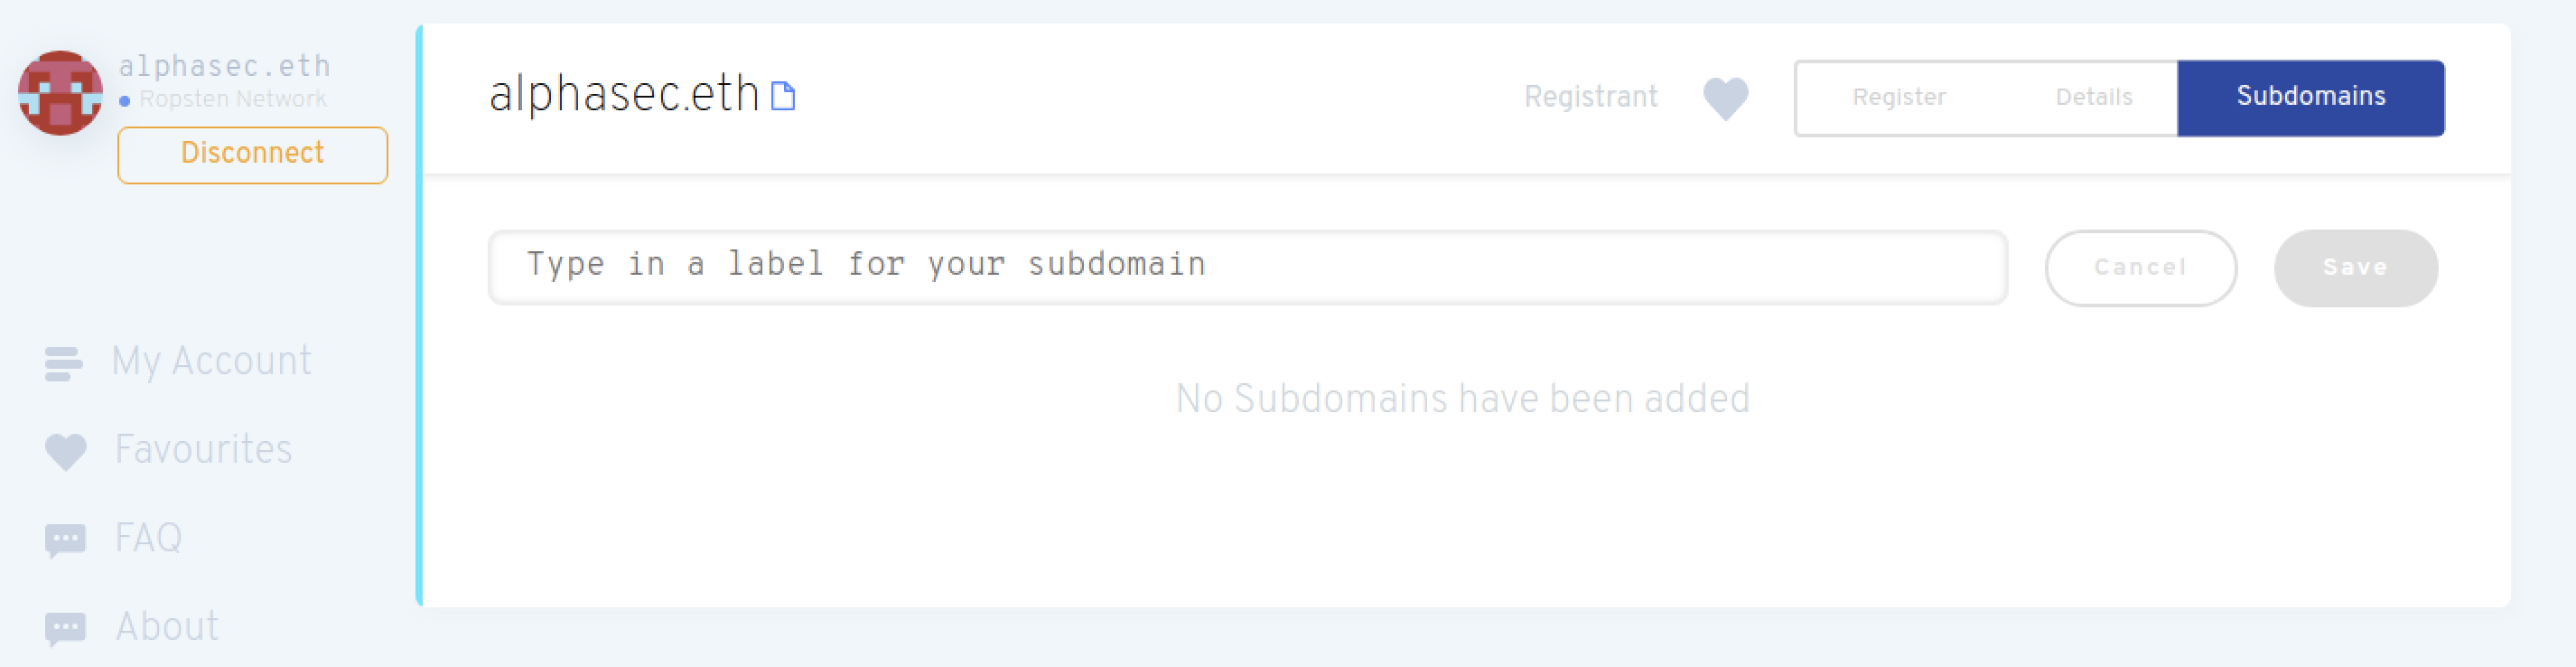 Subdomains